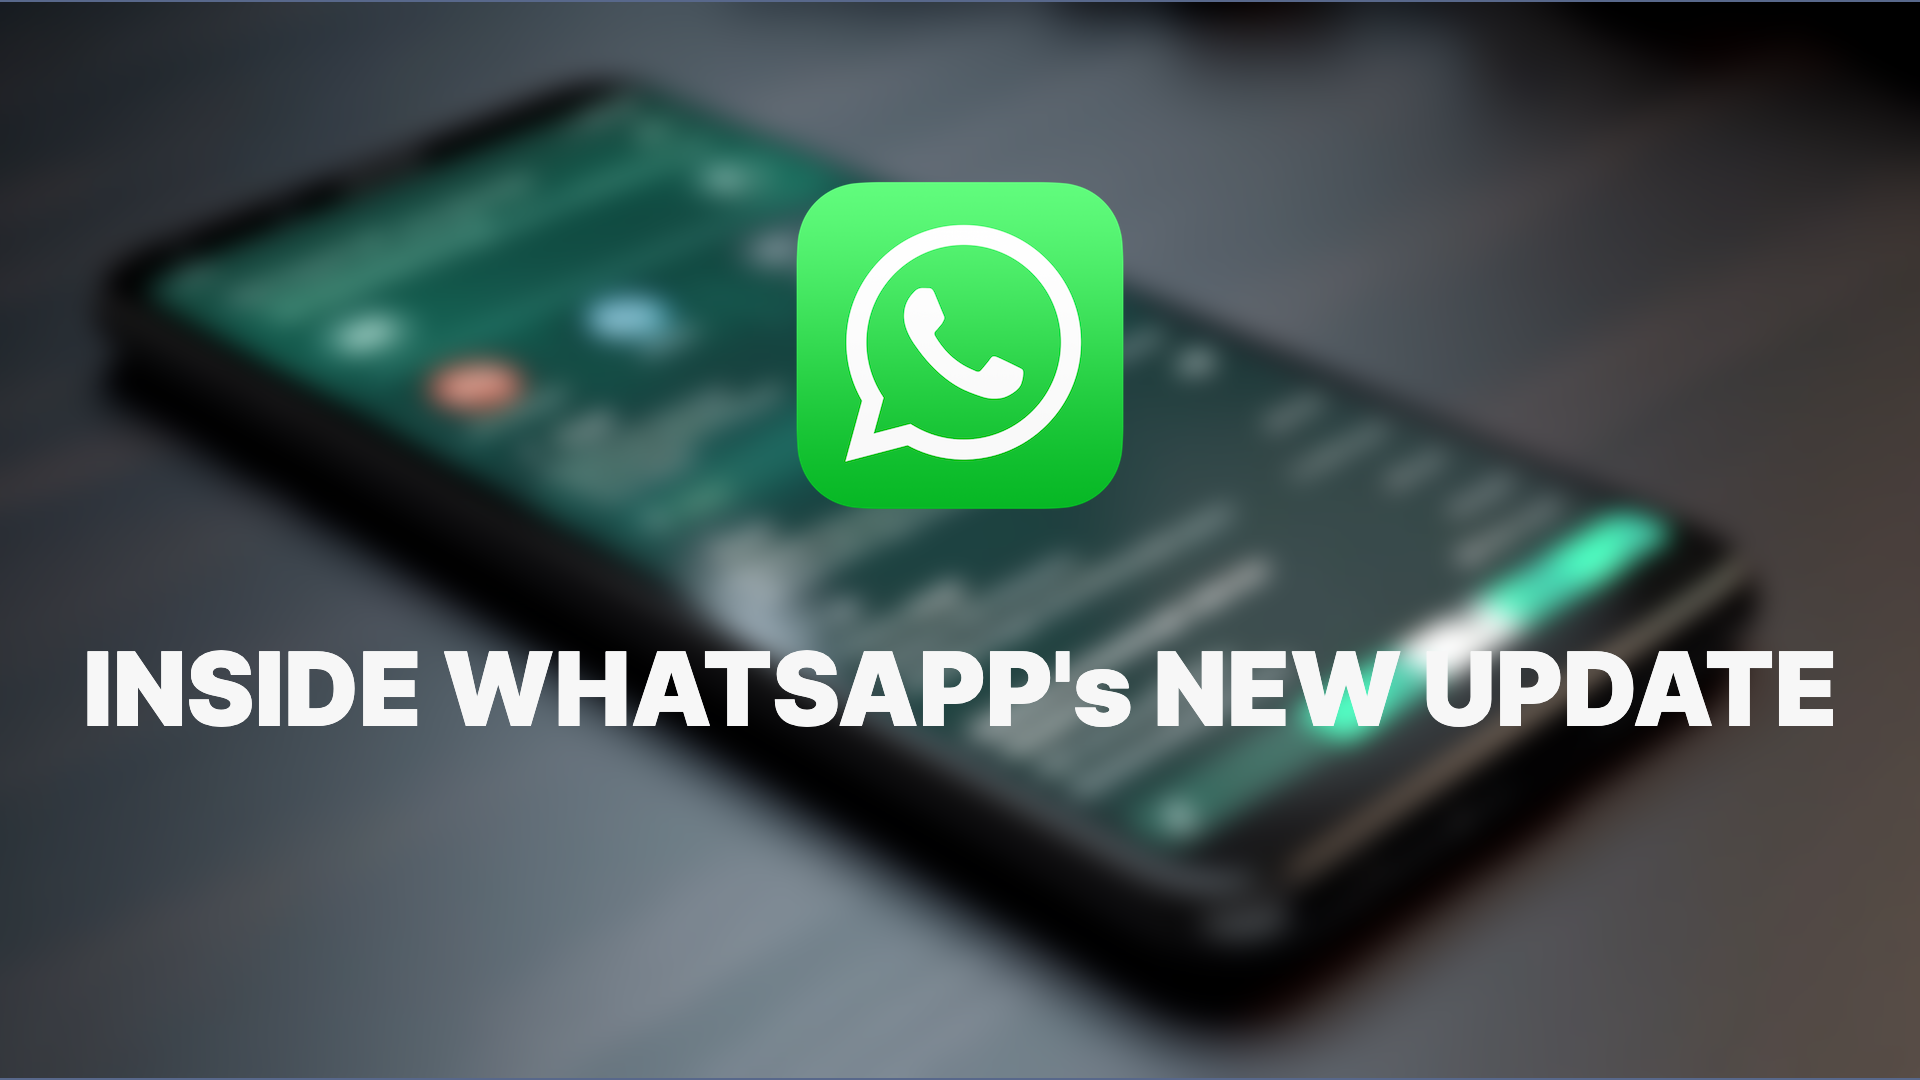 WhatsApp Android Update: New Interface & Bottom Navigation Bar